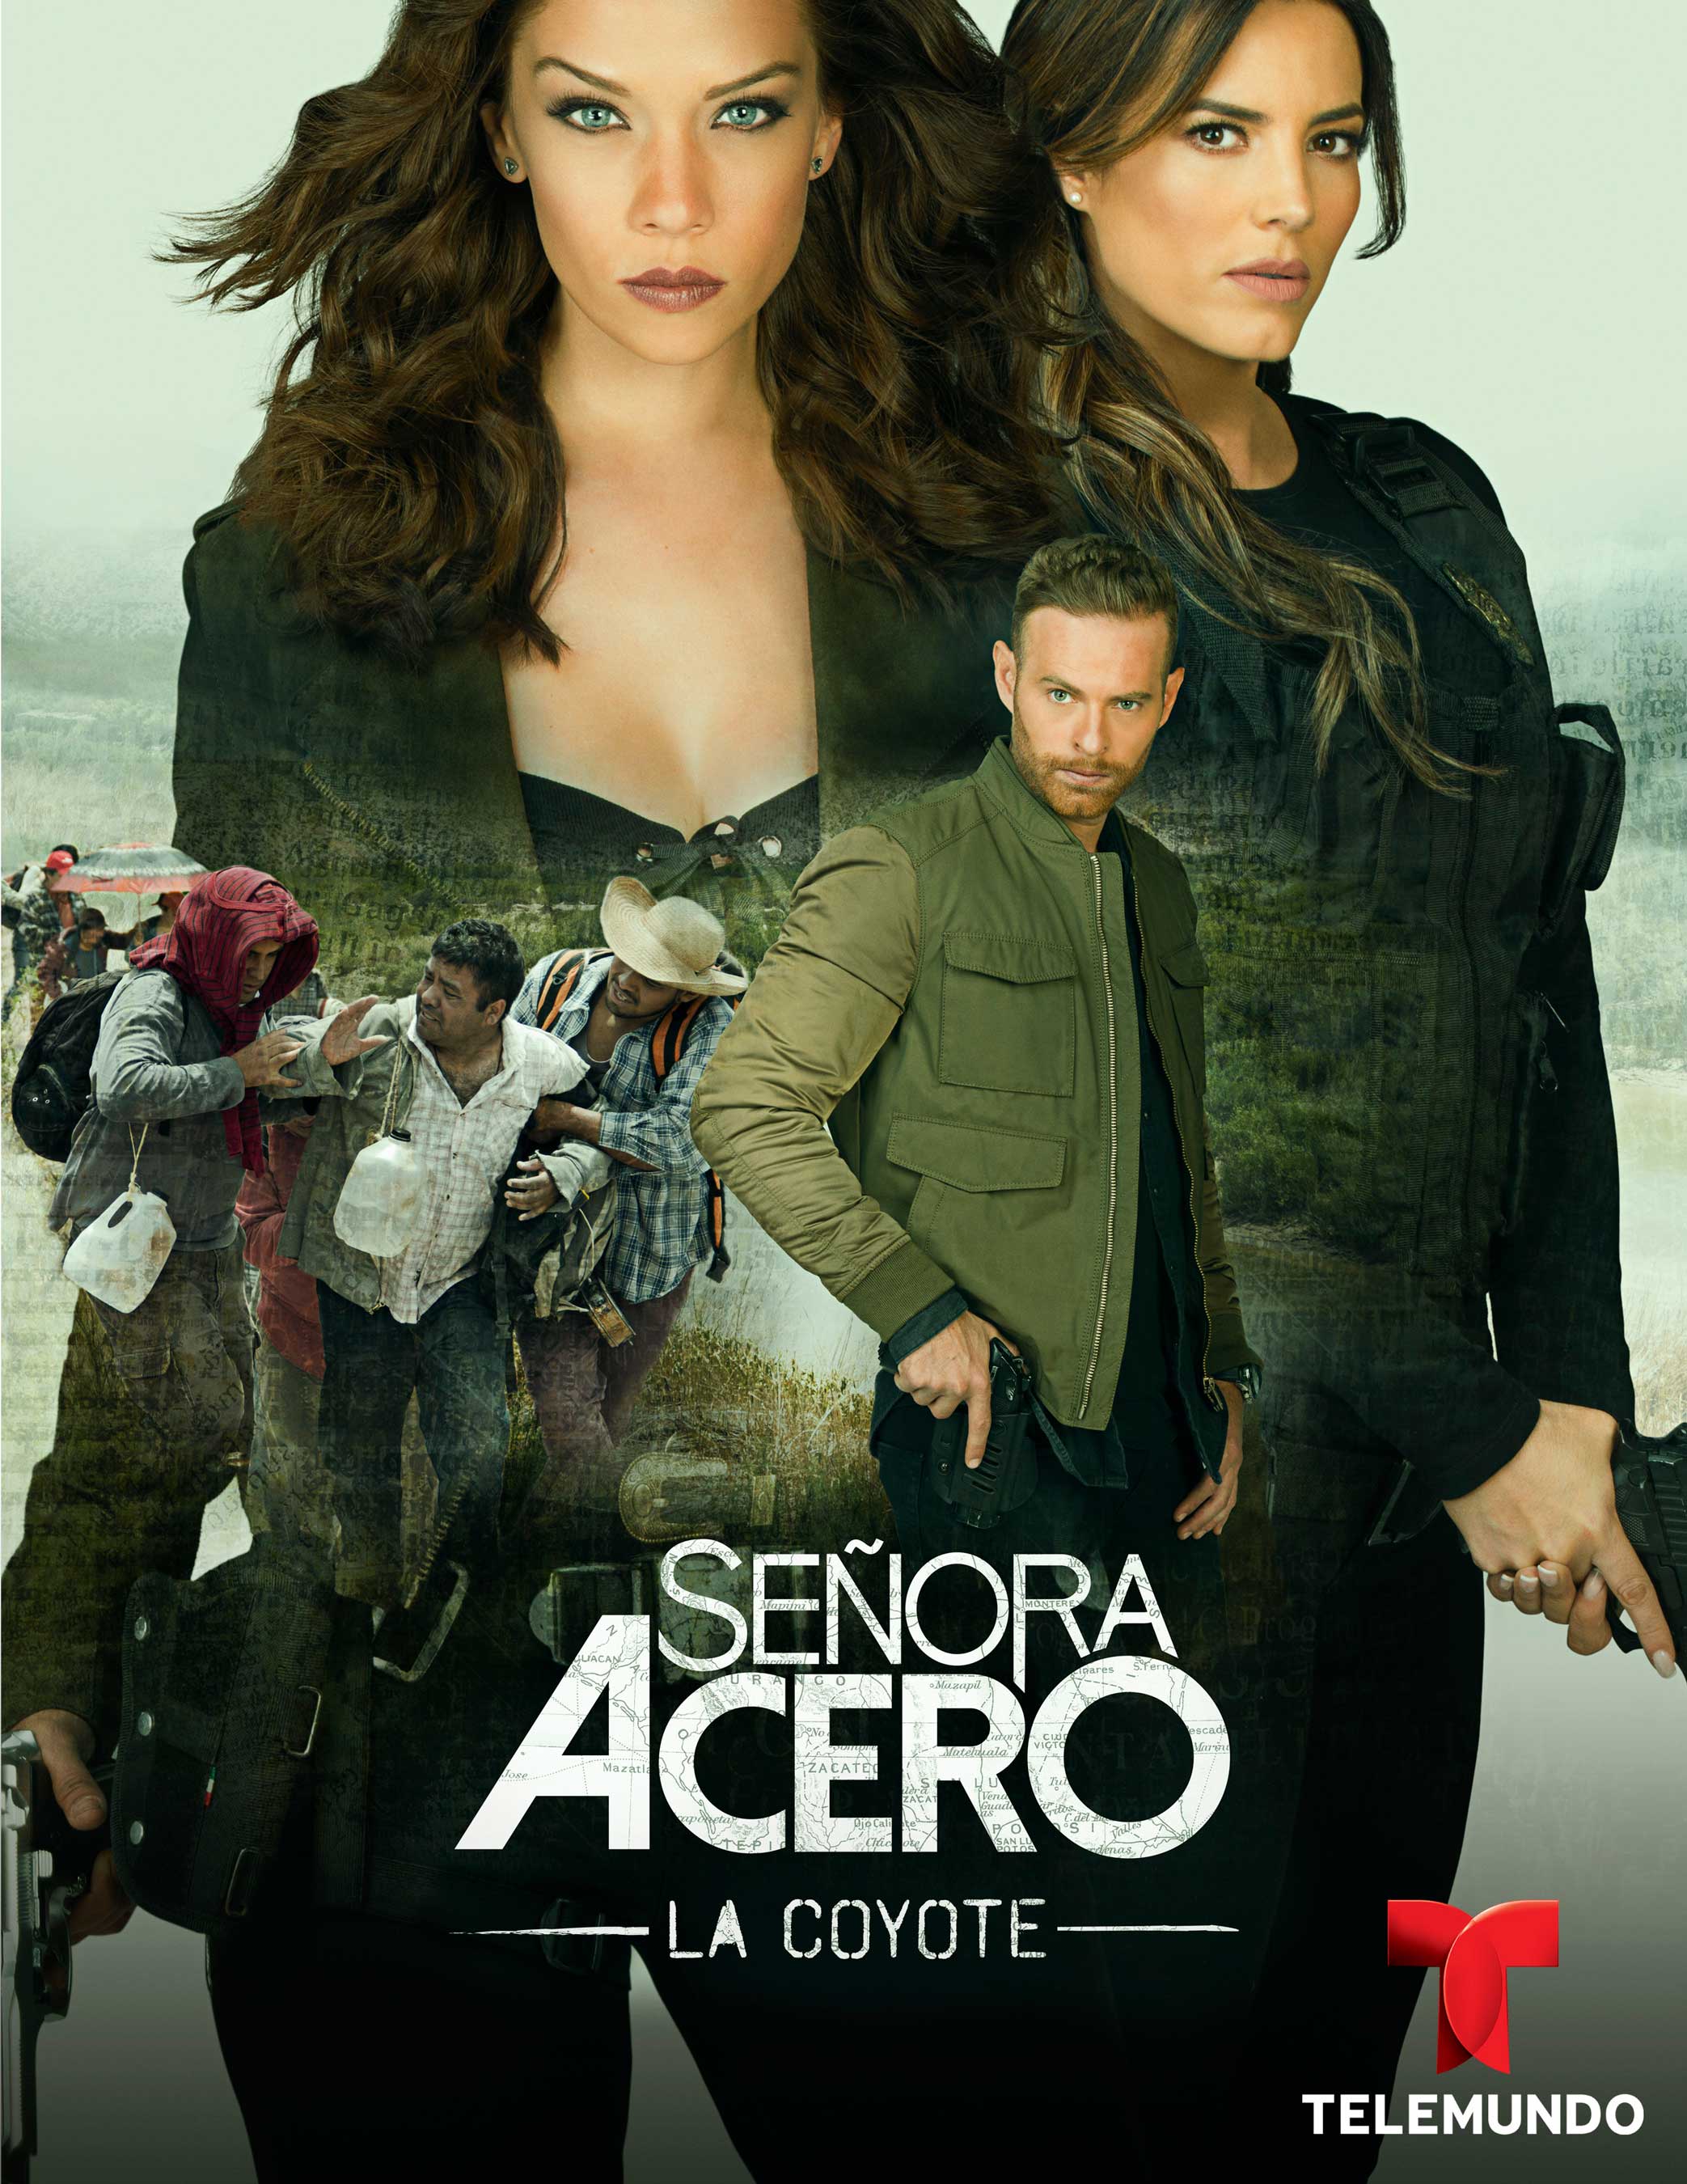 Cast of señora acero season 3